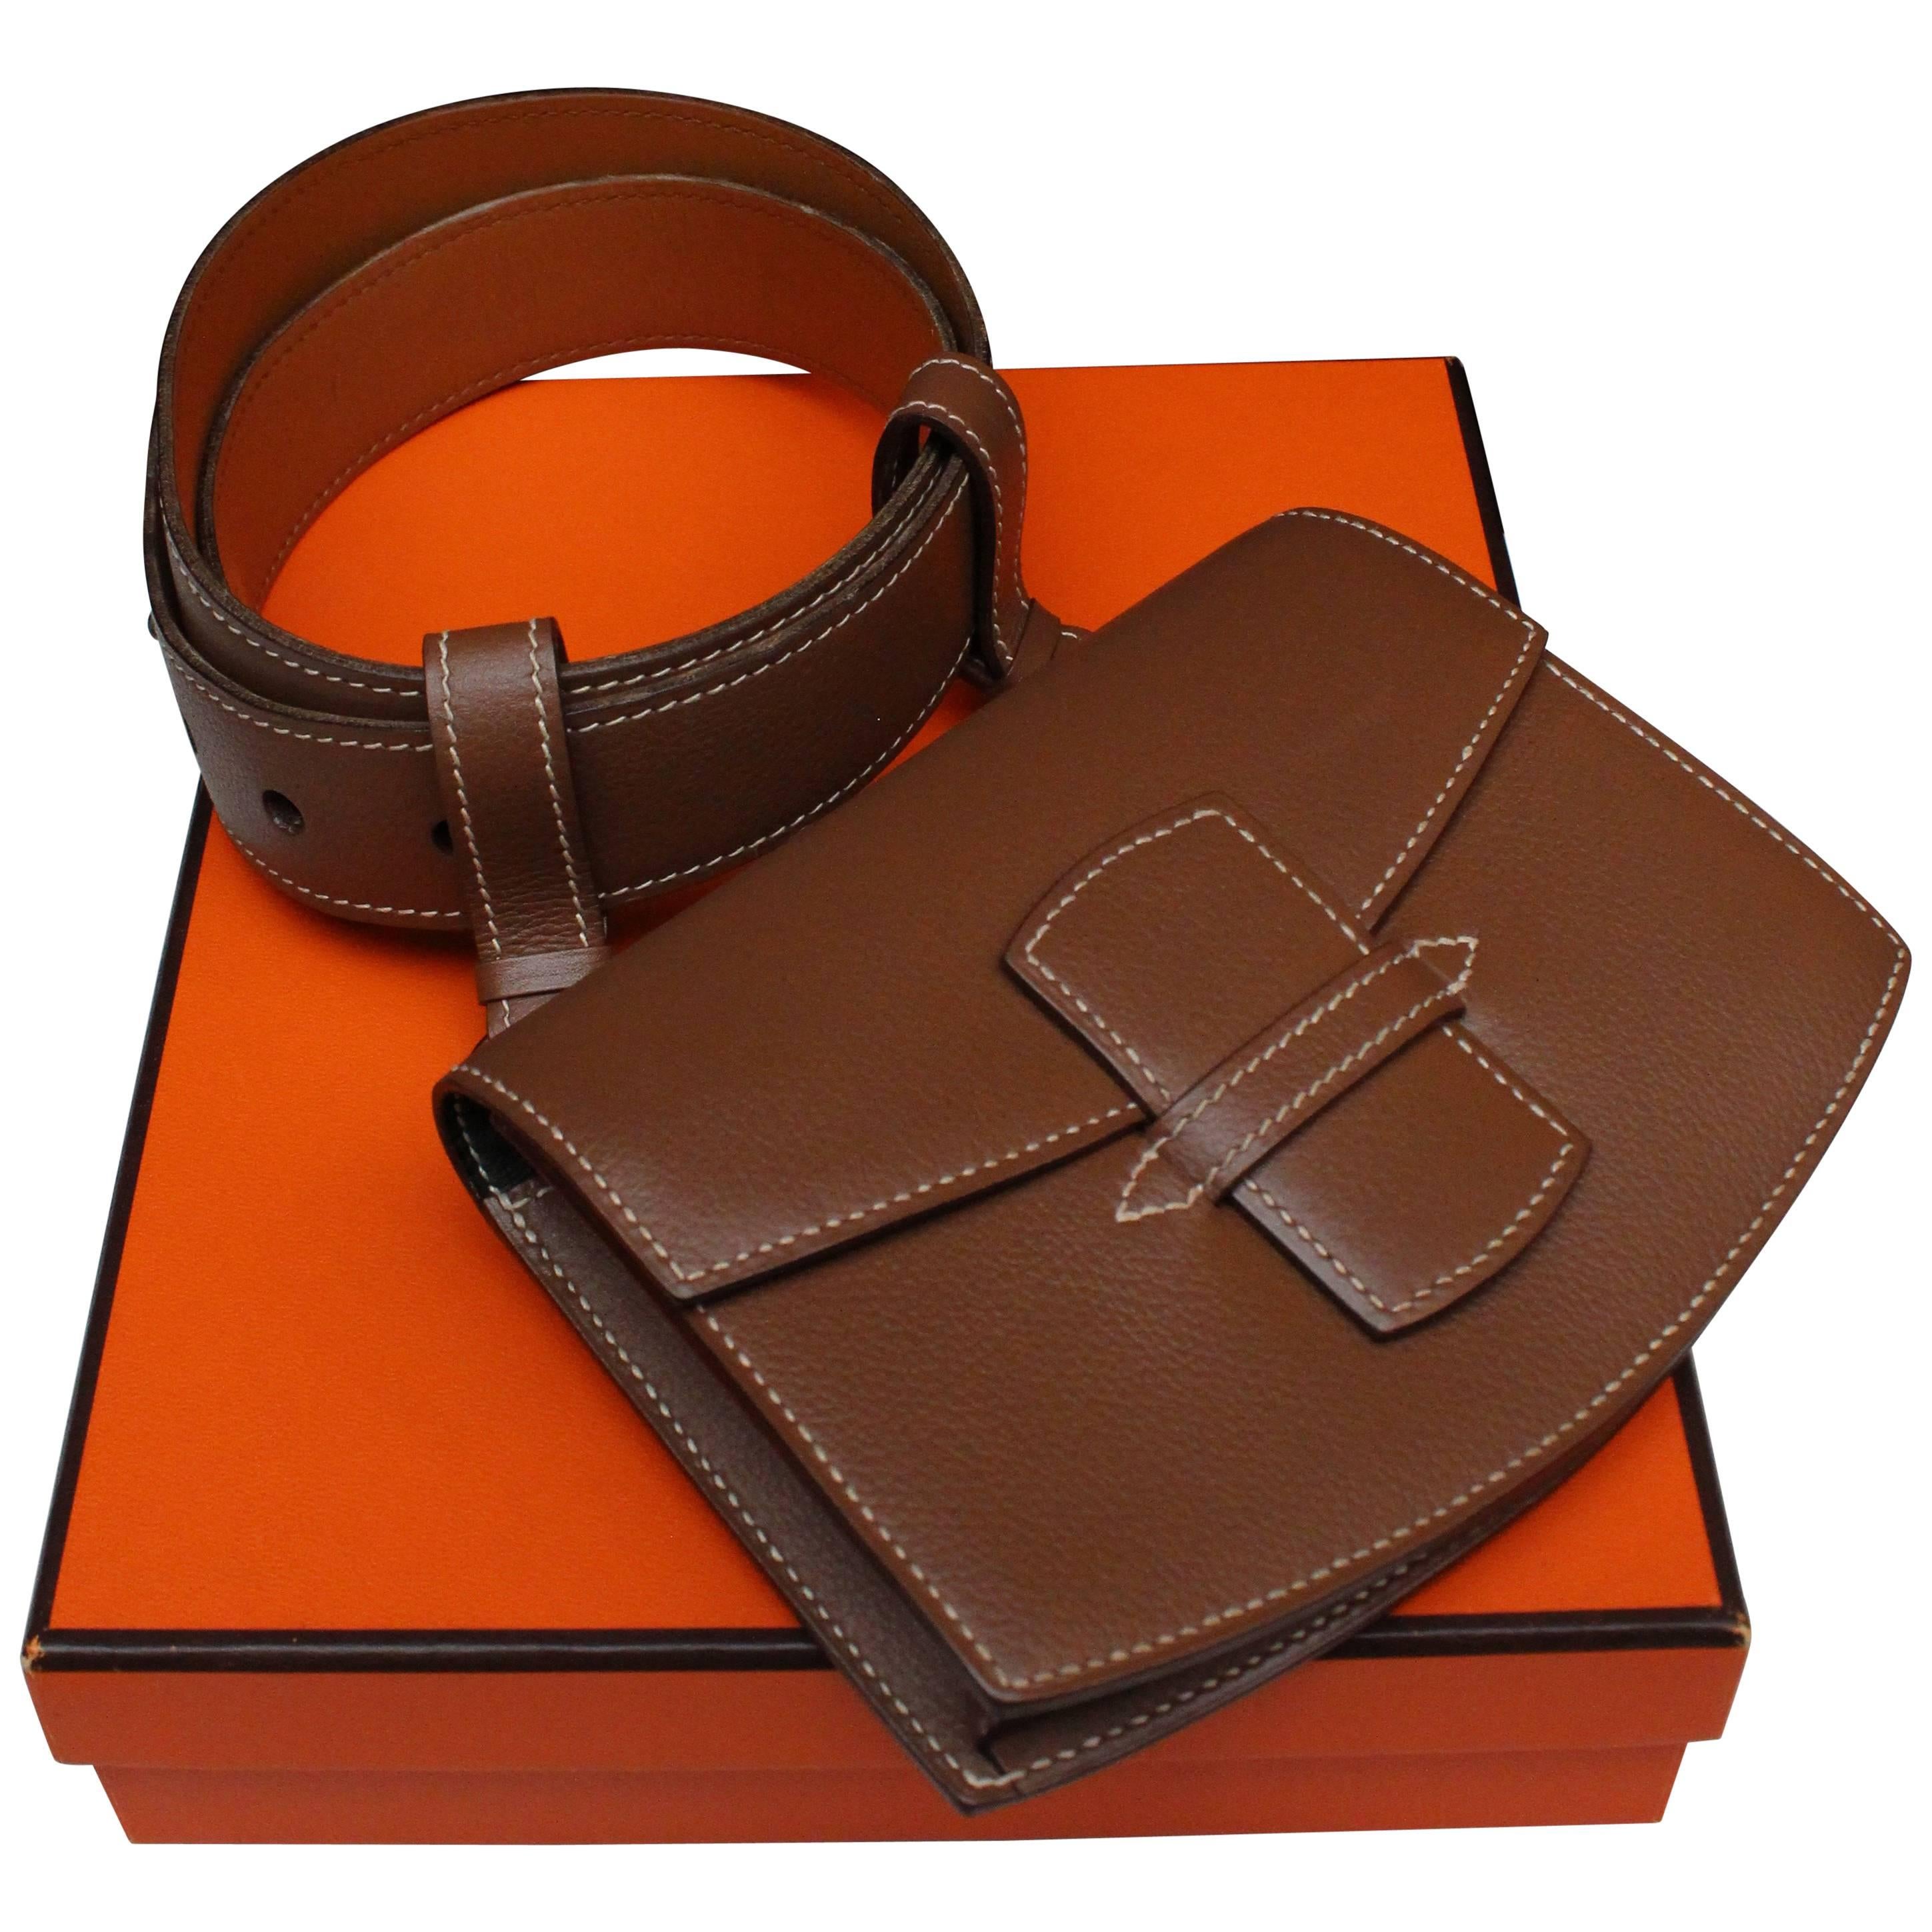 Hermès brown leather belt and clutch